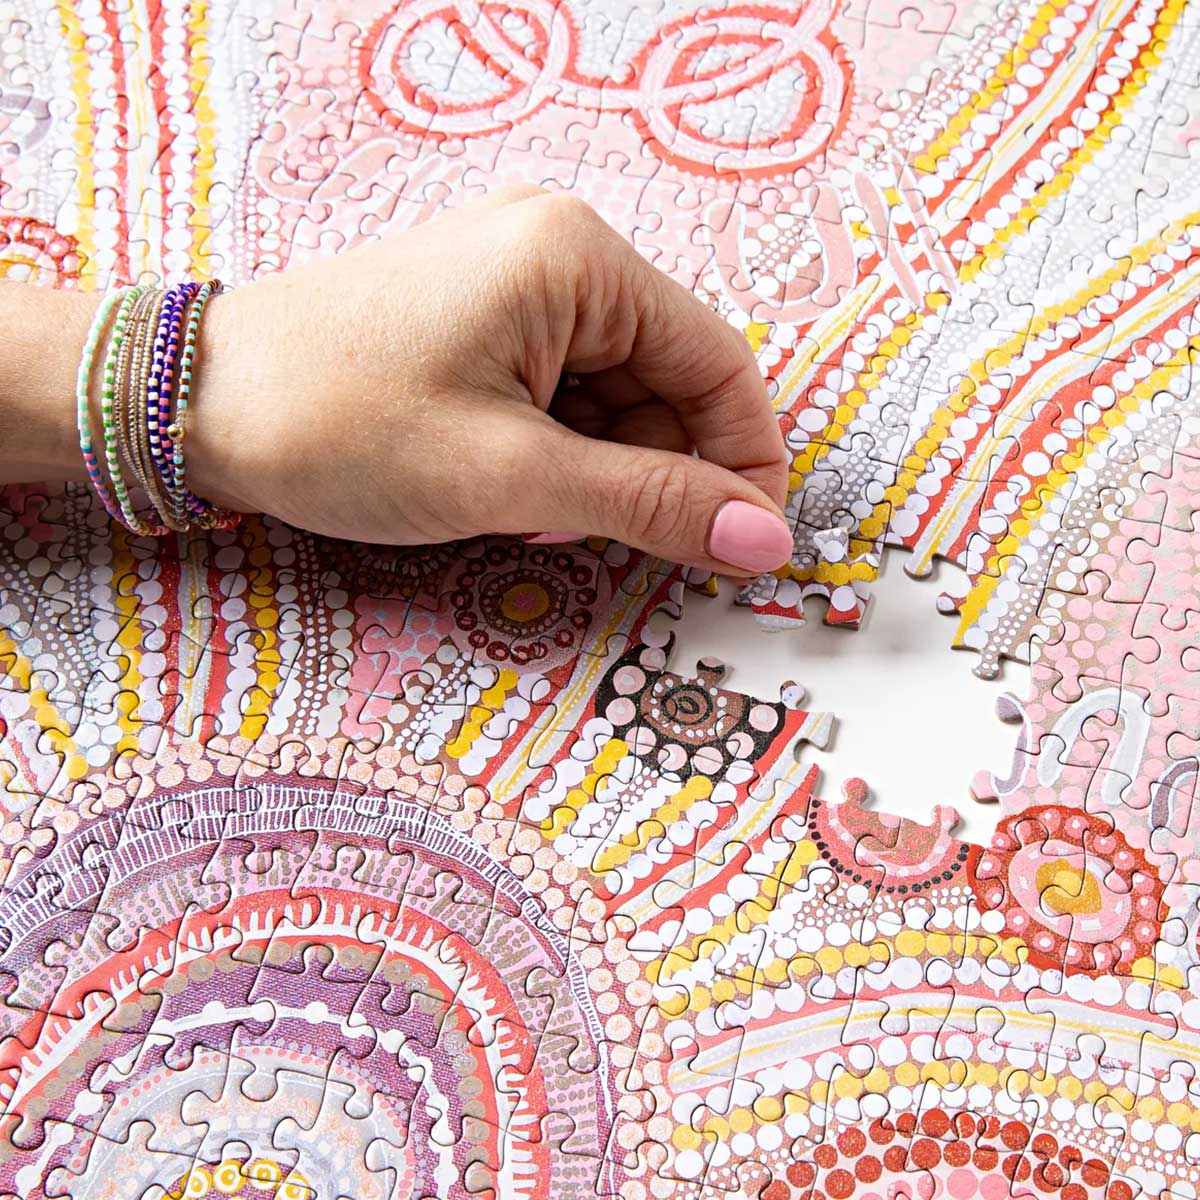 aboriginal-art-puzzle-with-glitter